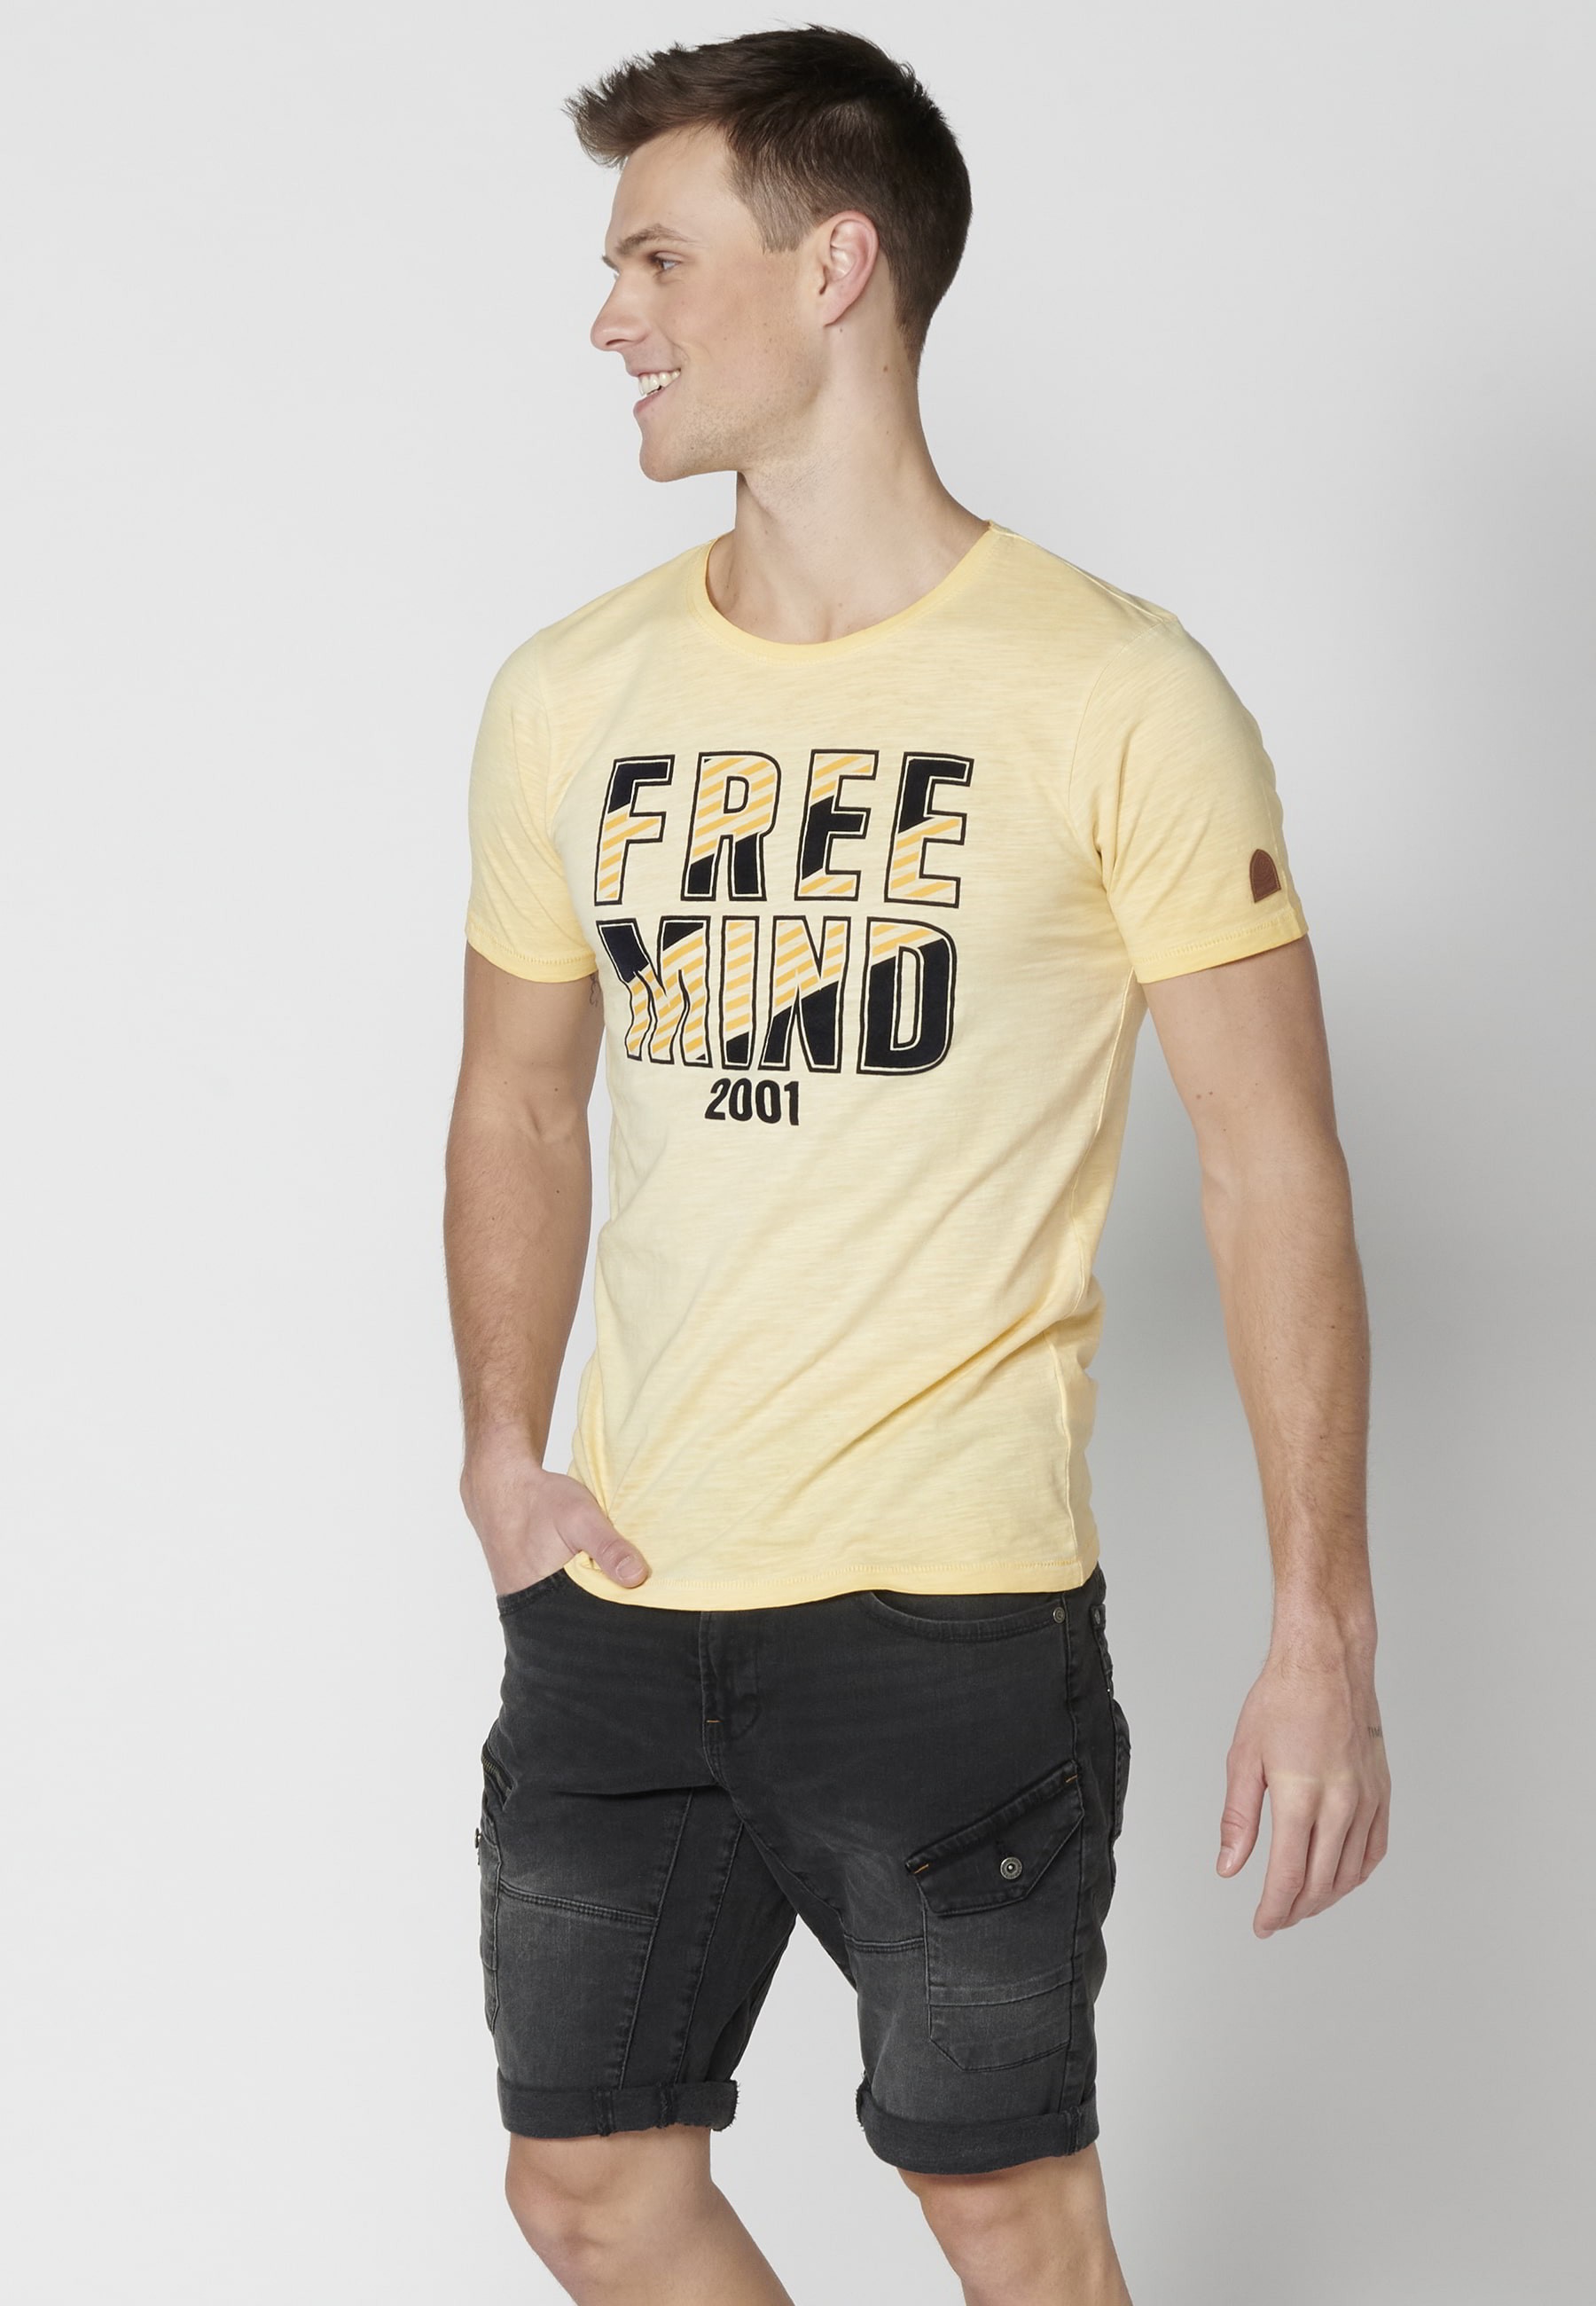 Camiseta manga corta de Algodón color Amarillo para Hombre